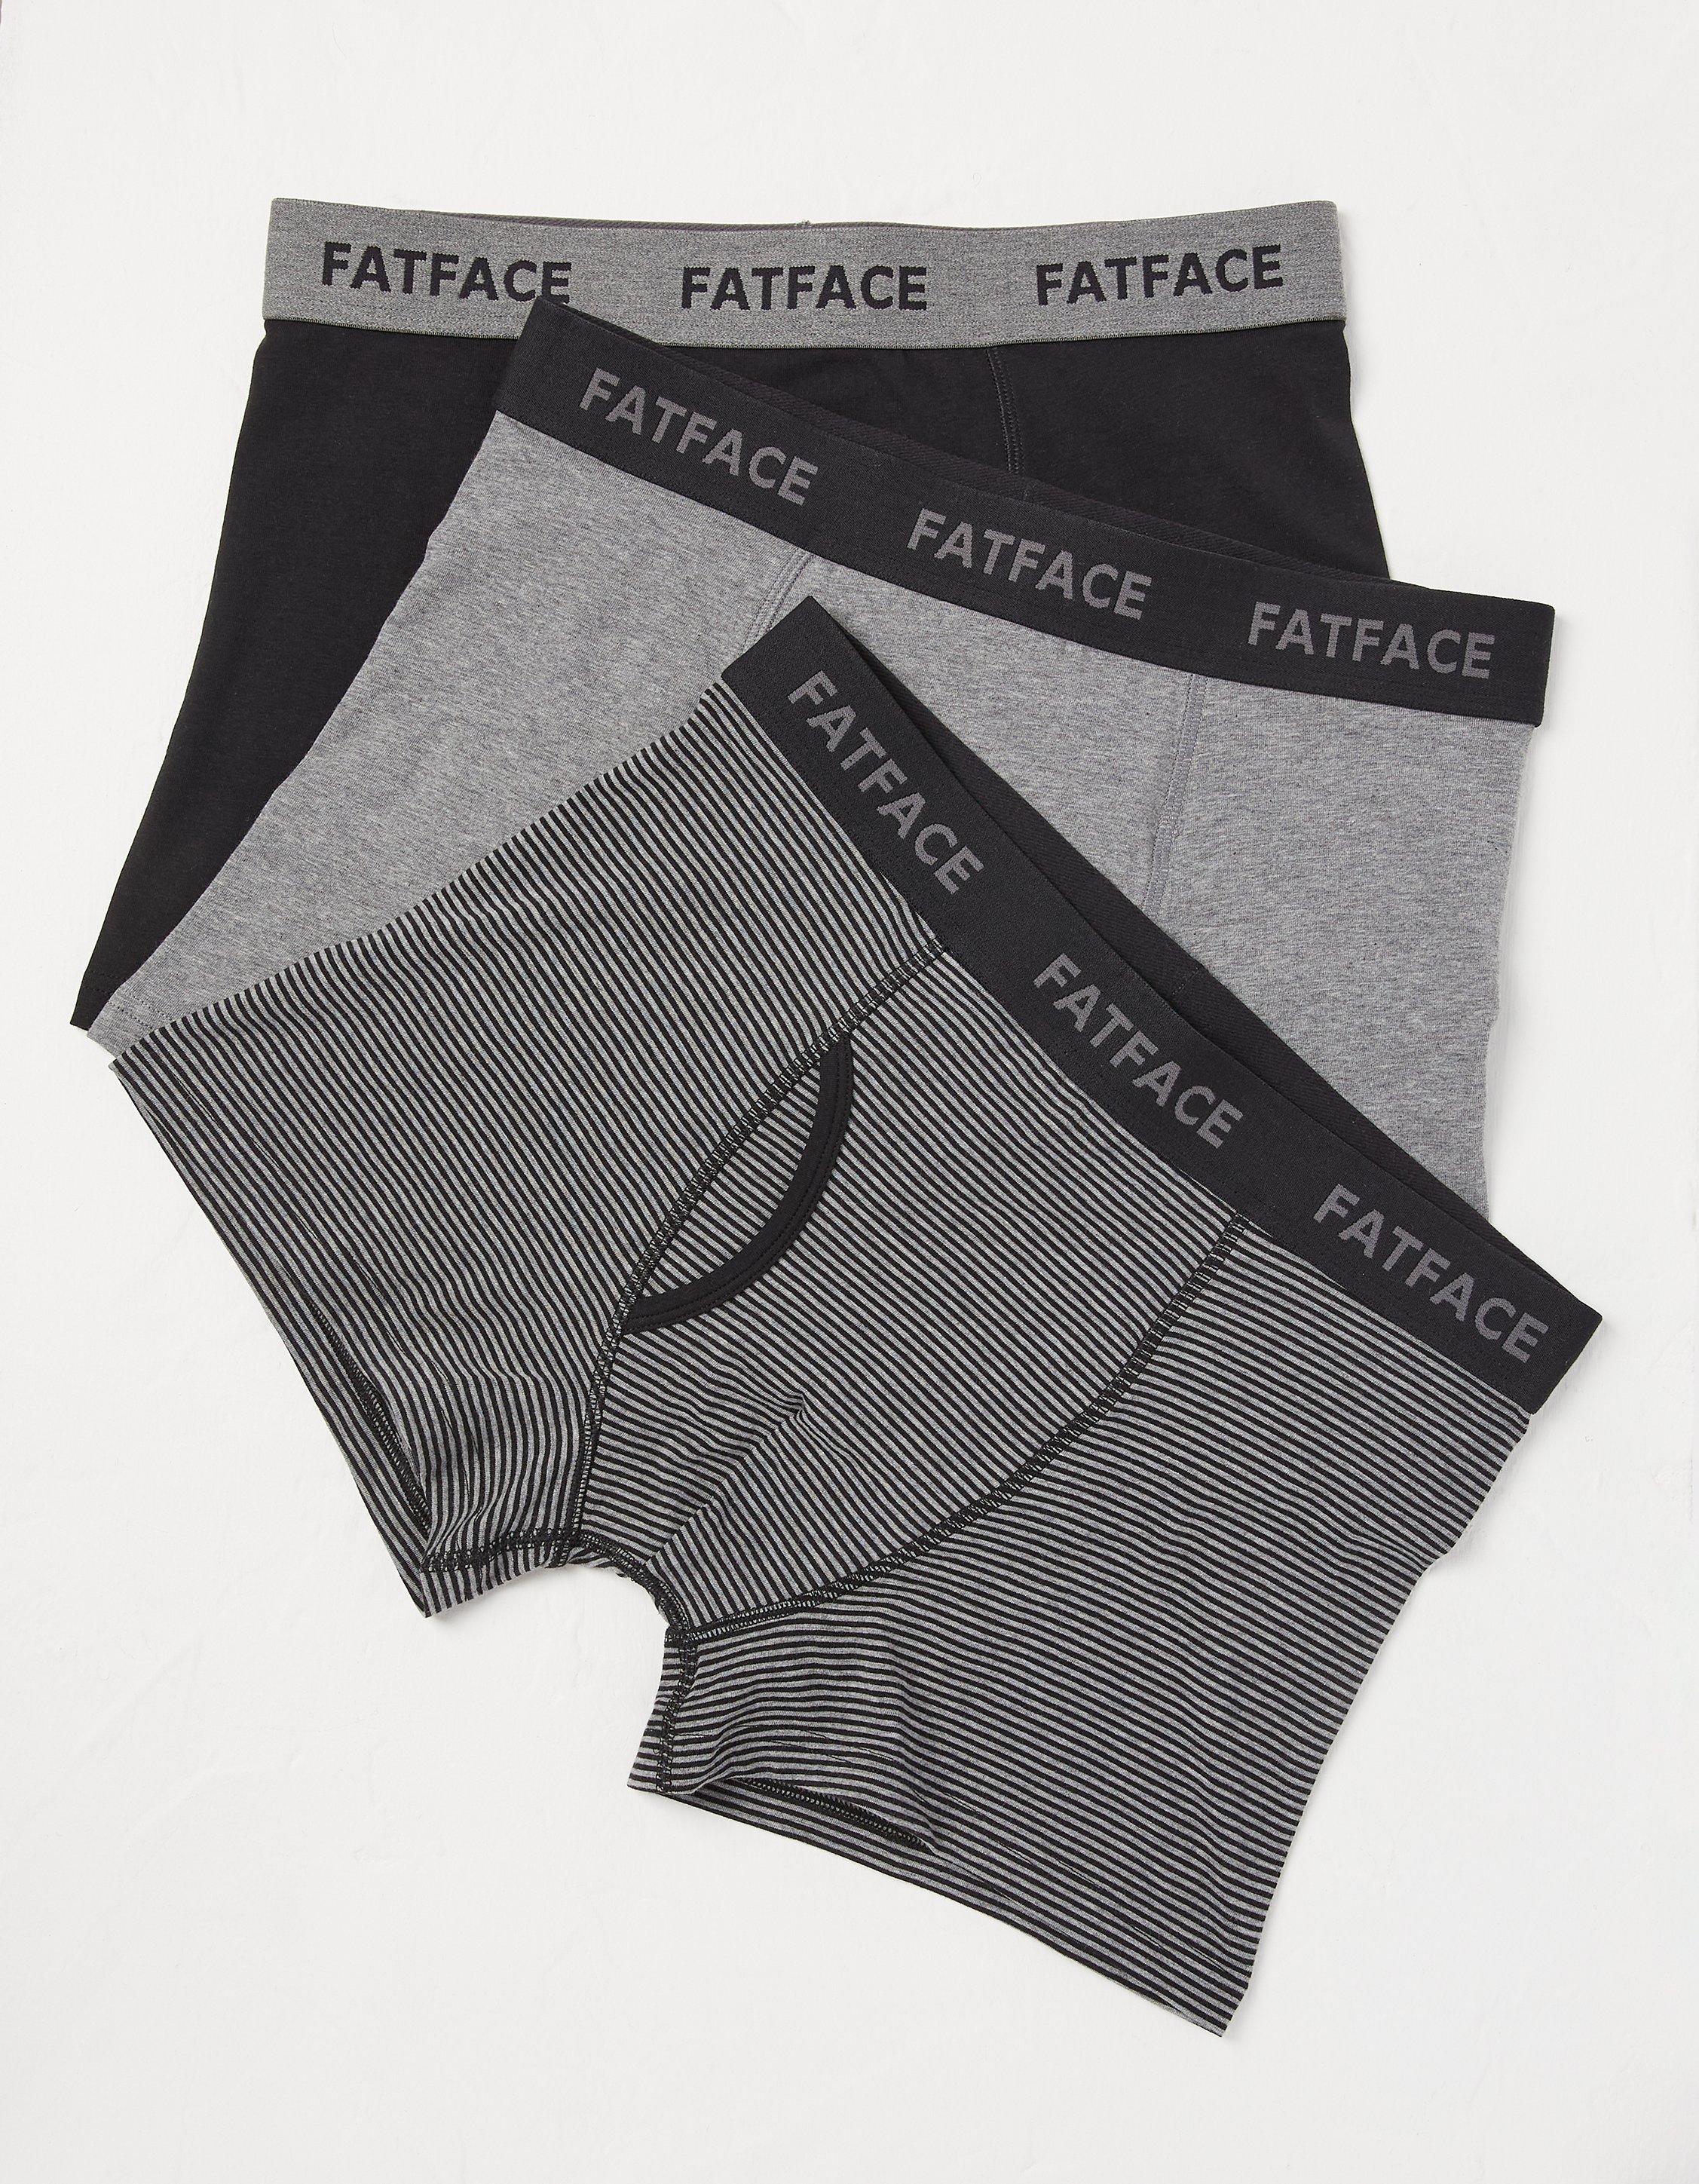 FatFace Men's Underwear & Socks - FatFace UK